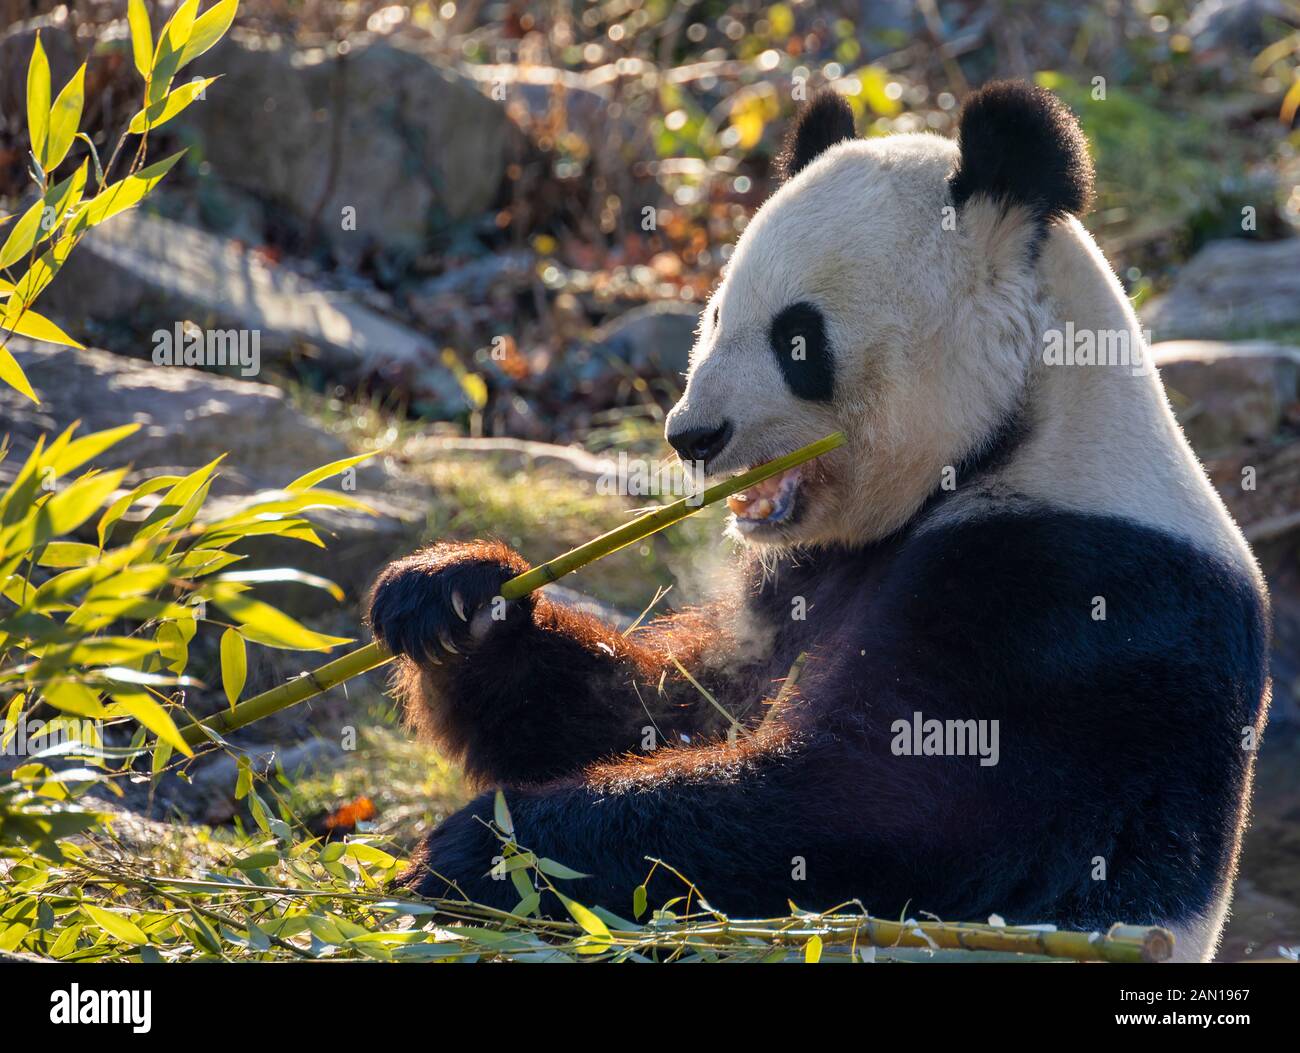 VIENNA, AUSTRIA - DECEMBER 30: Panda Yang Yang eats bamboo at the Schonbrunn Zoo (in German: Tiergarten Schönbrunn) on December 30, 2019 in Vienna, Austria. Stock Photo